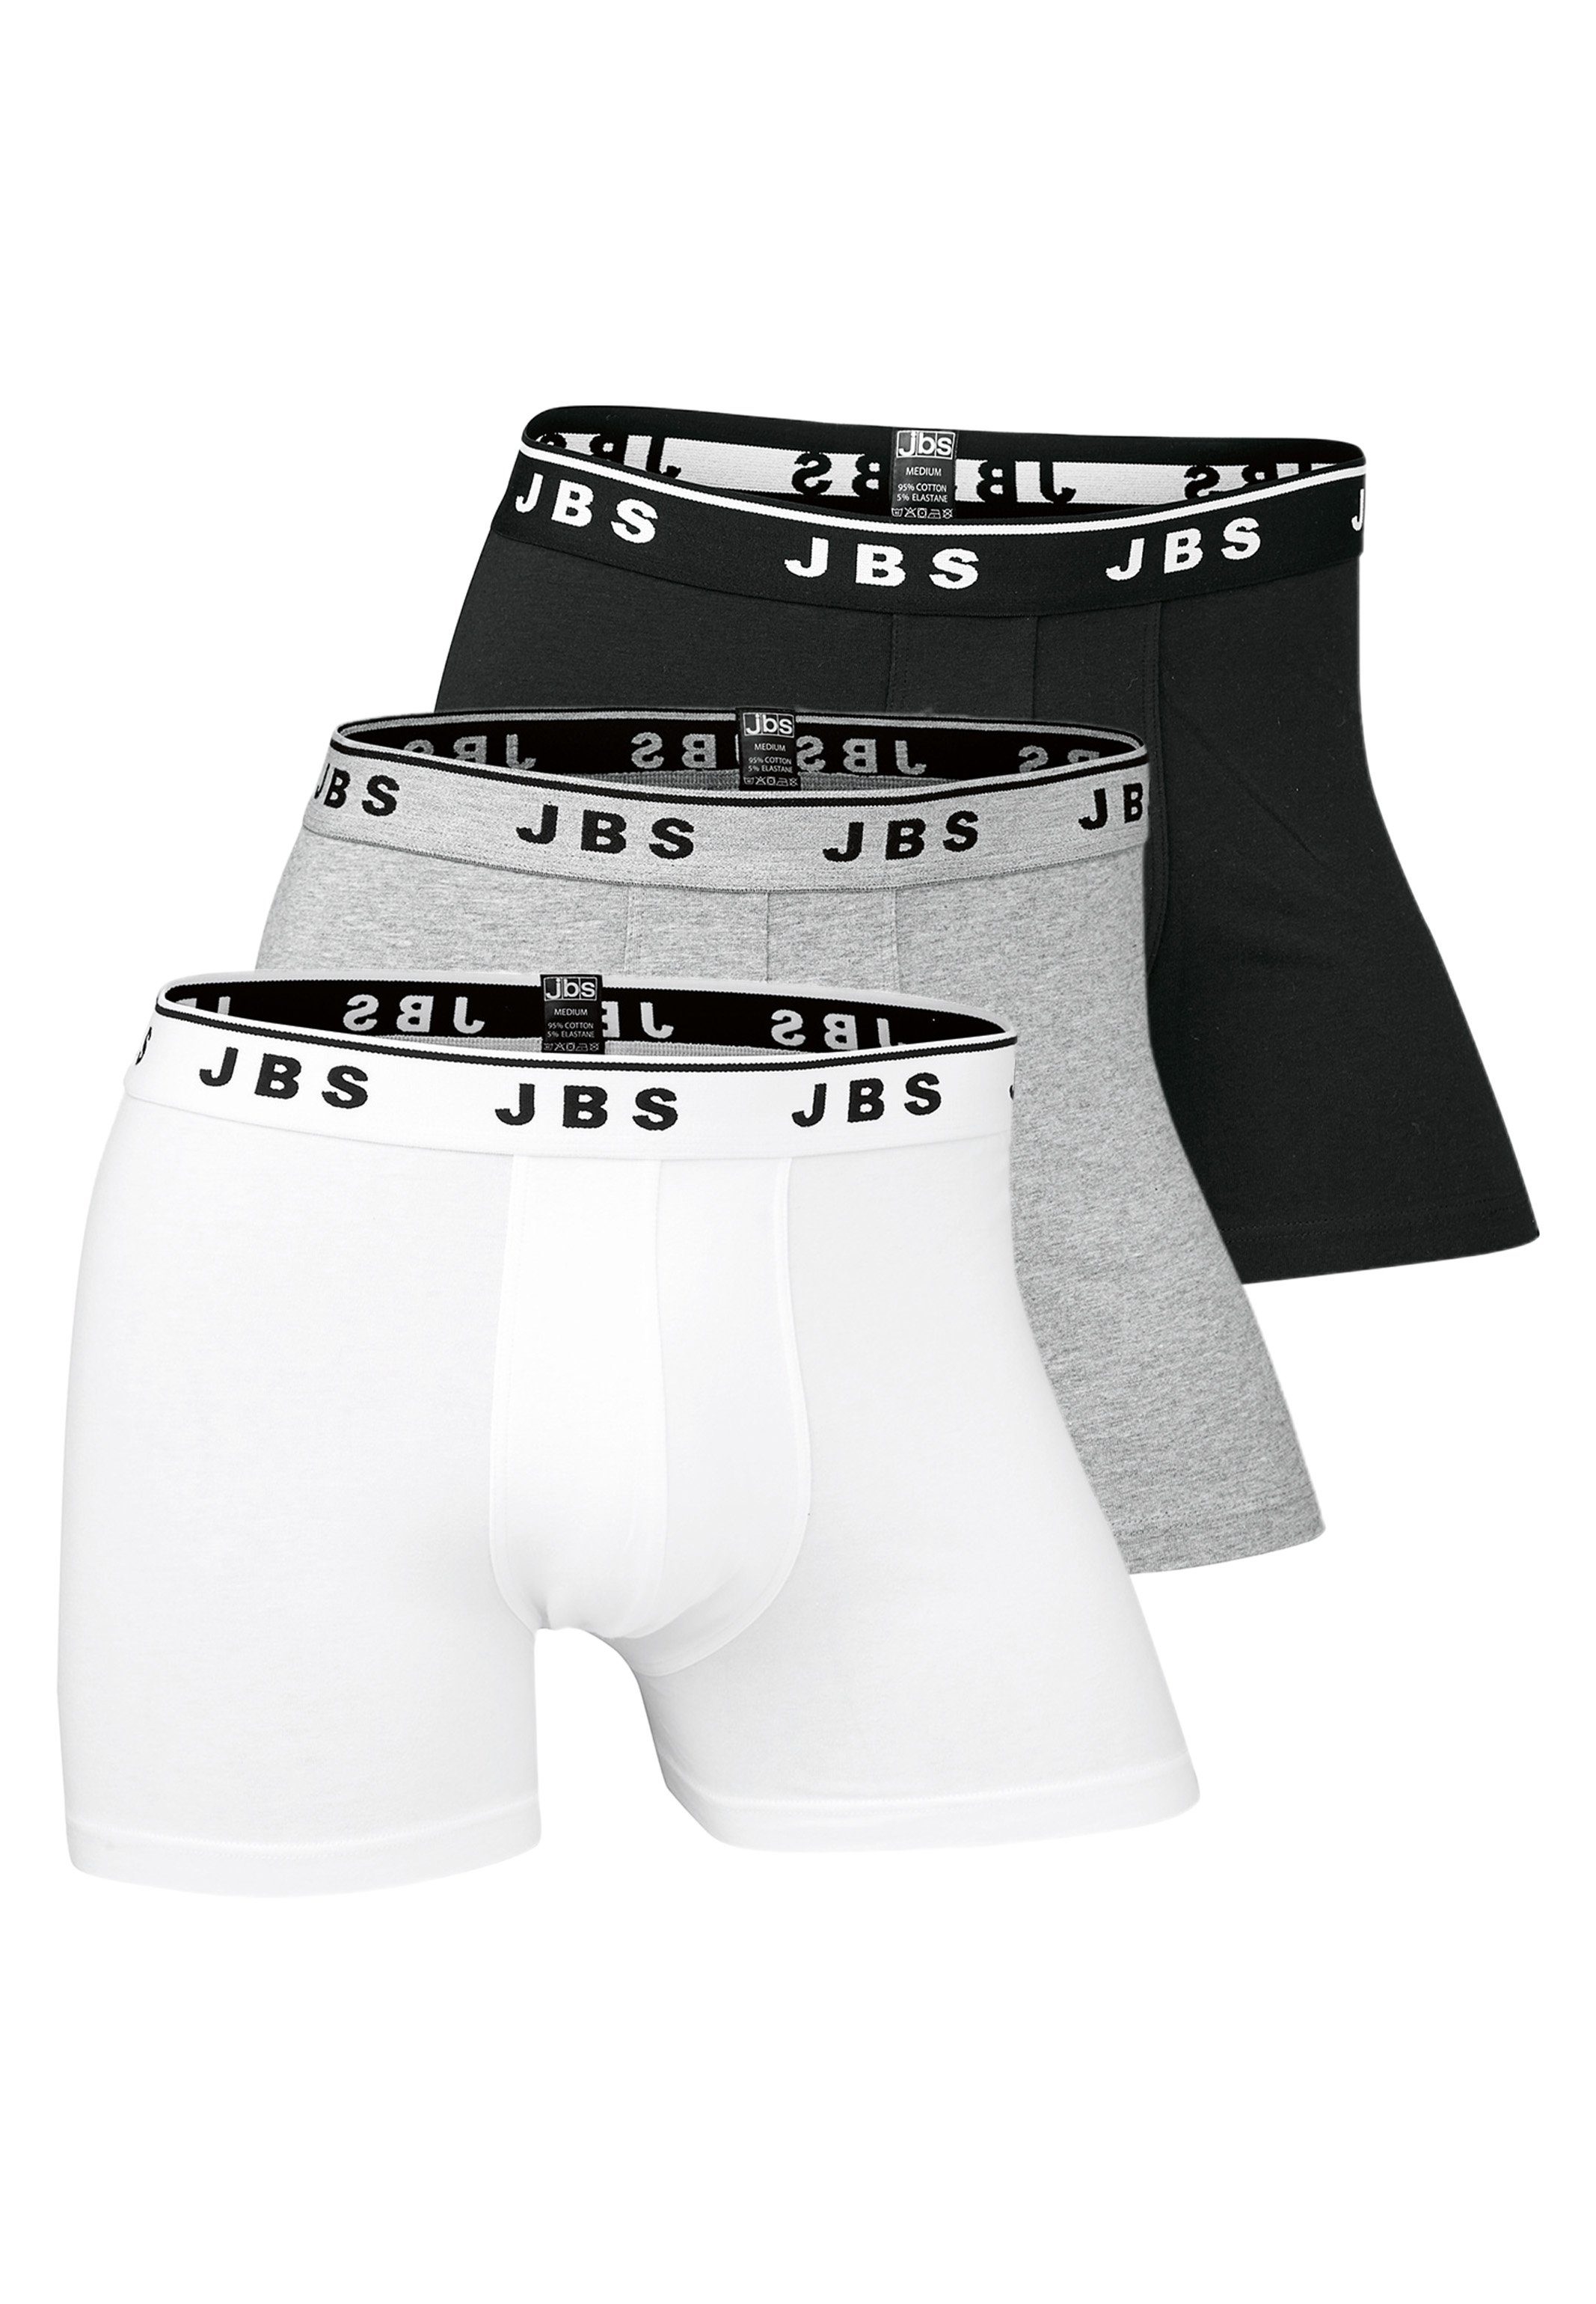 jbs Retro Boxer 3er Pack Organic Cotton (Spar-Set, 3-St) Long Short / Pant - Baumwolle - Ohne Eingriff - Atmungsaktiv Schwarz / Grau / Weiß